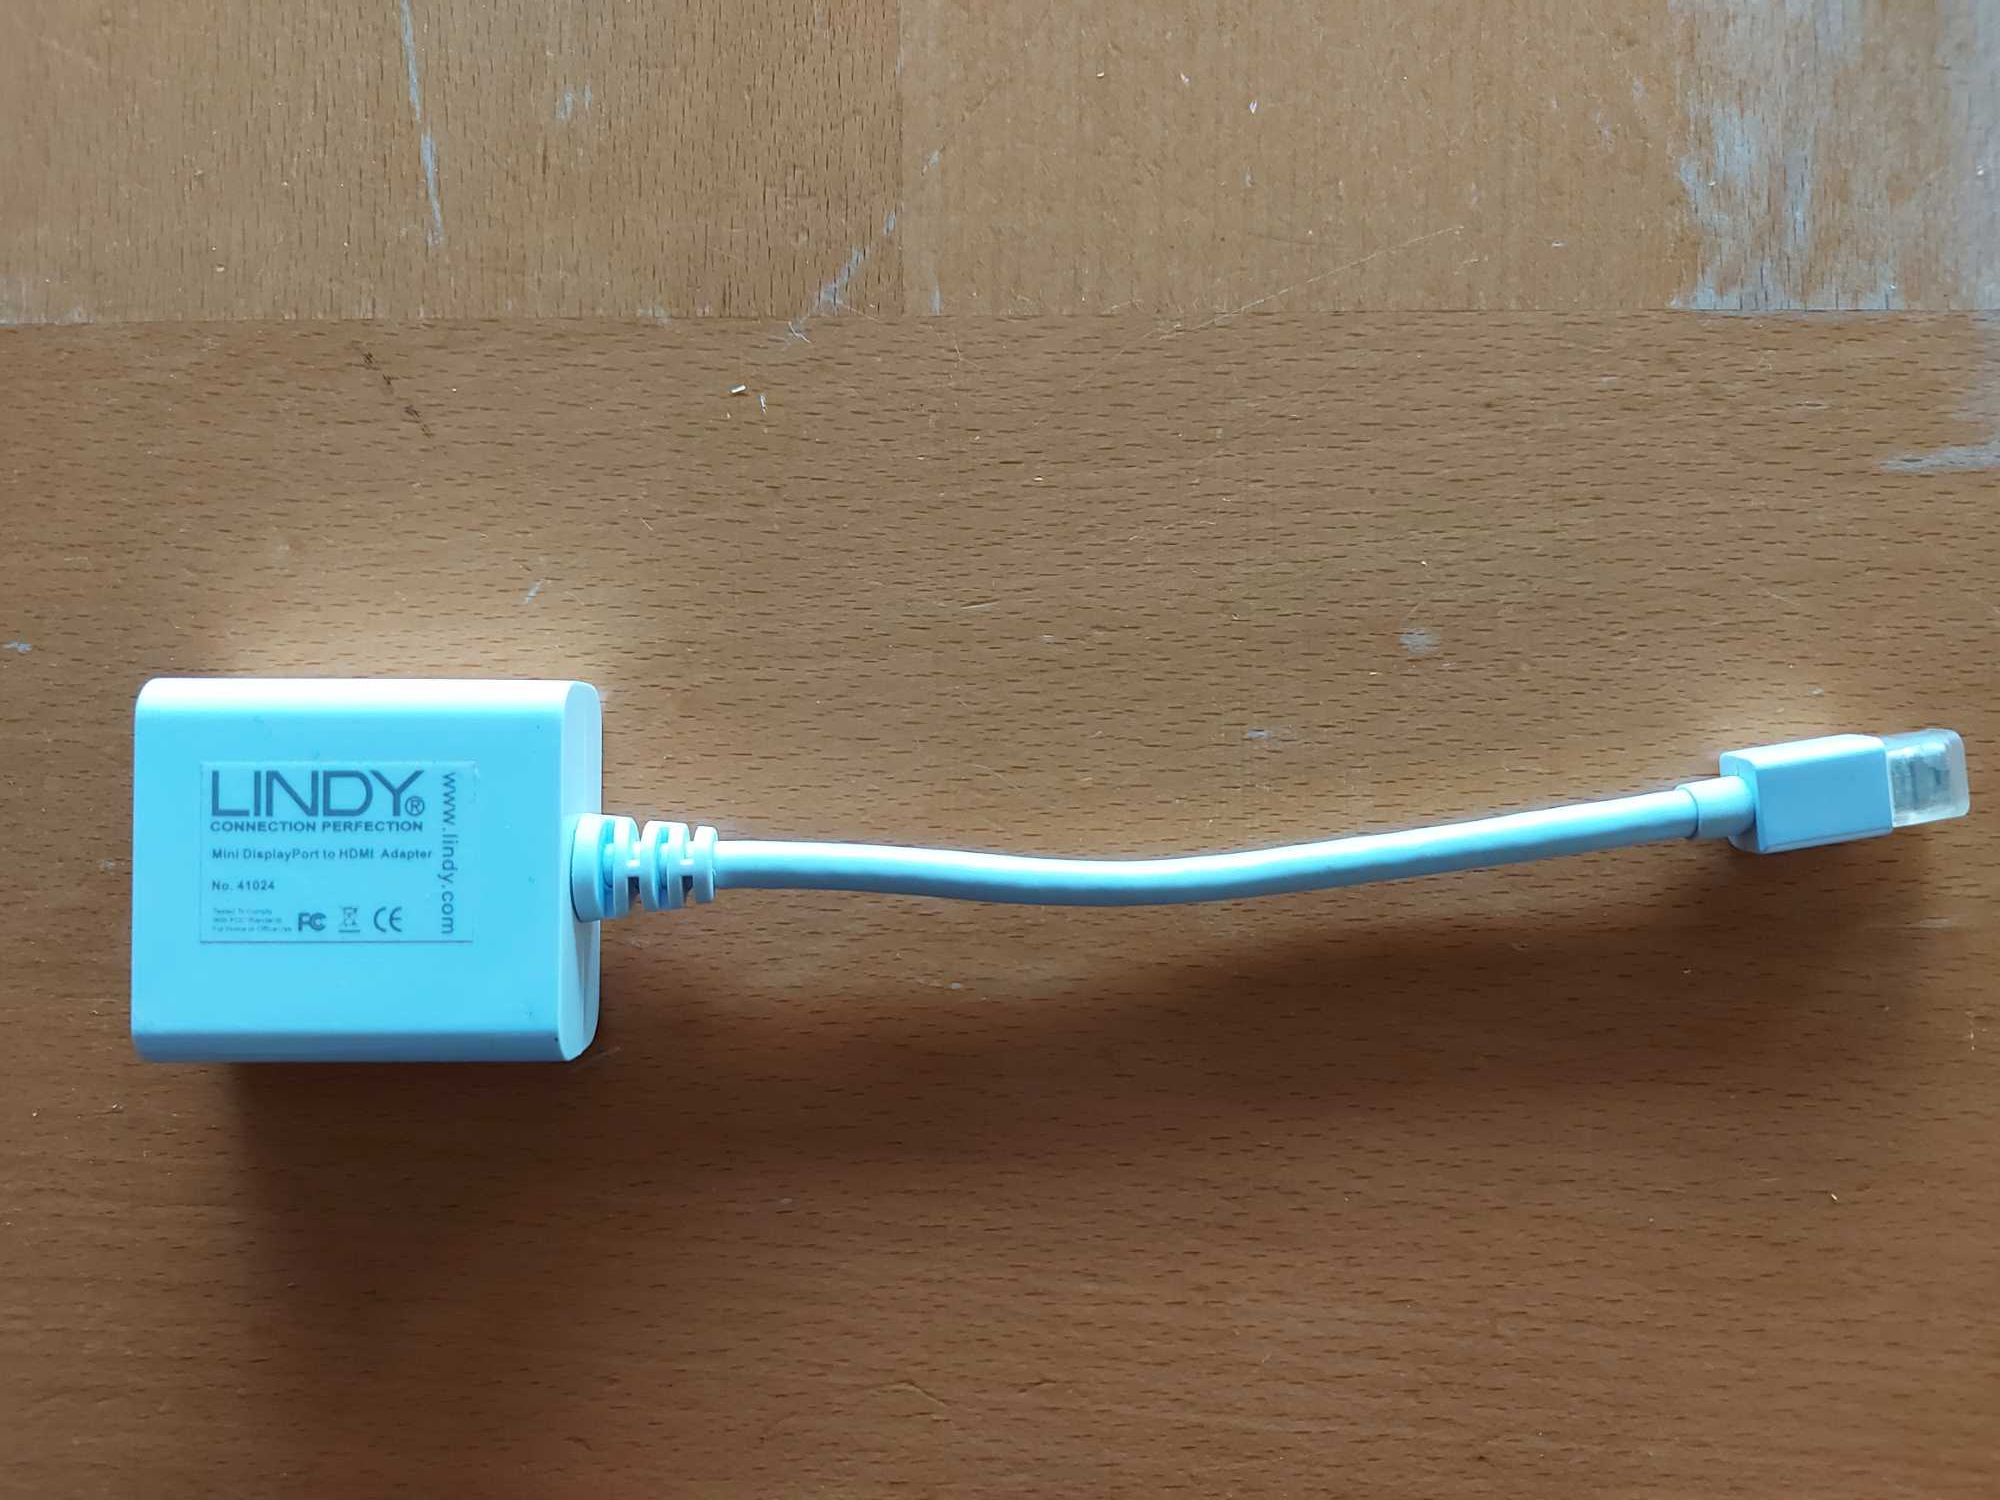 Adaptador para Apple, Mini Display Port para HDMI da marca LYNDY